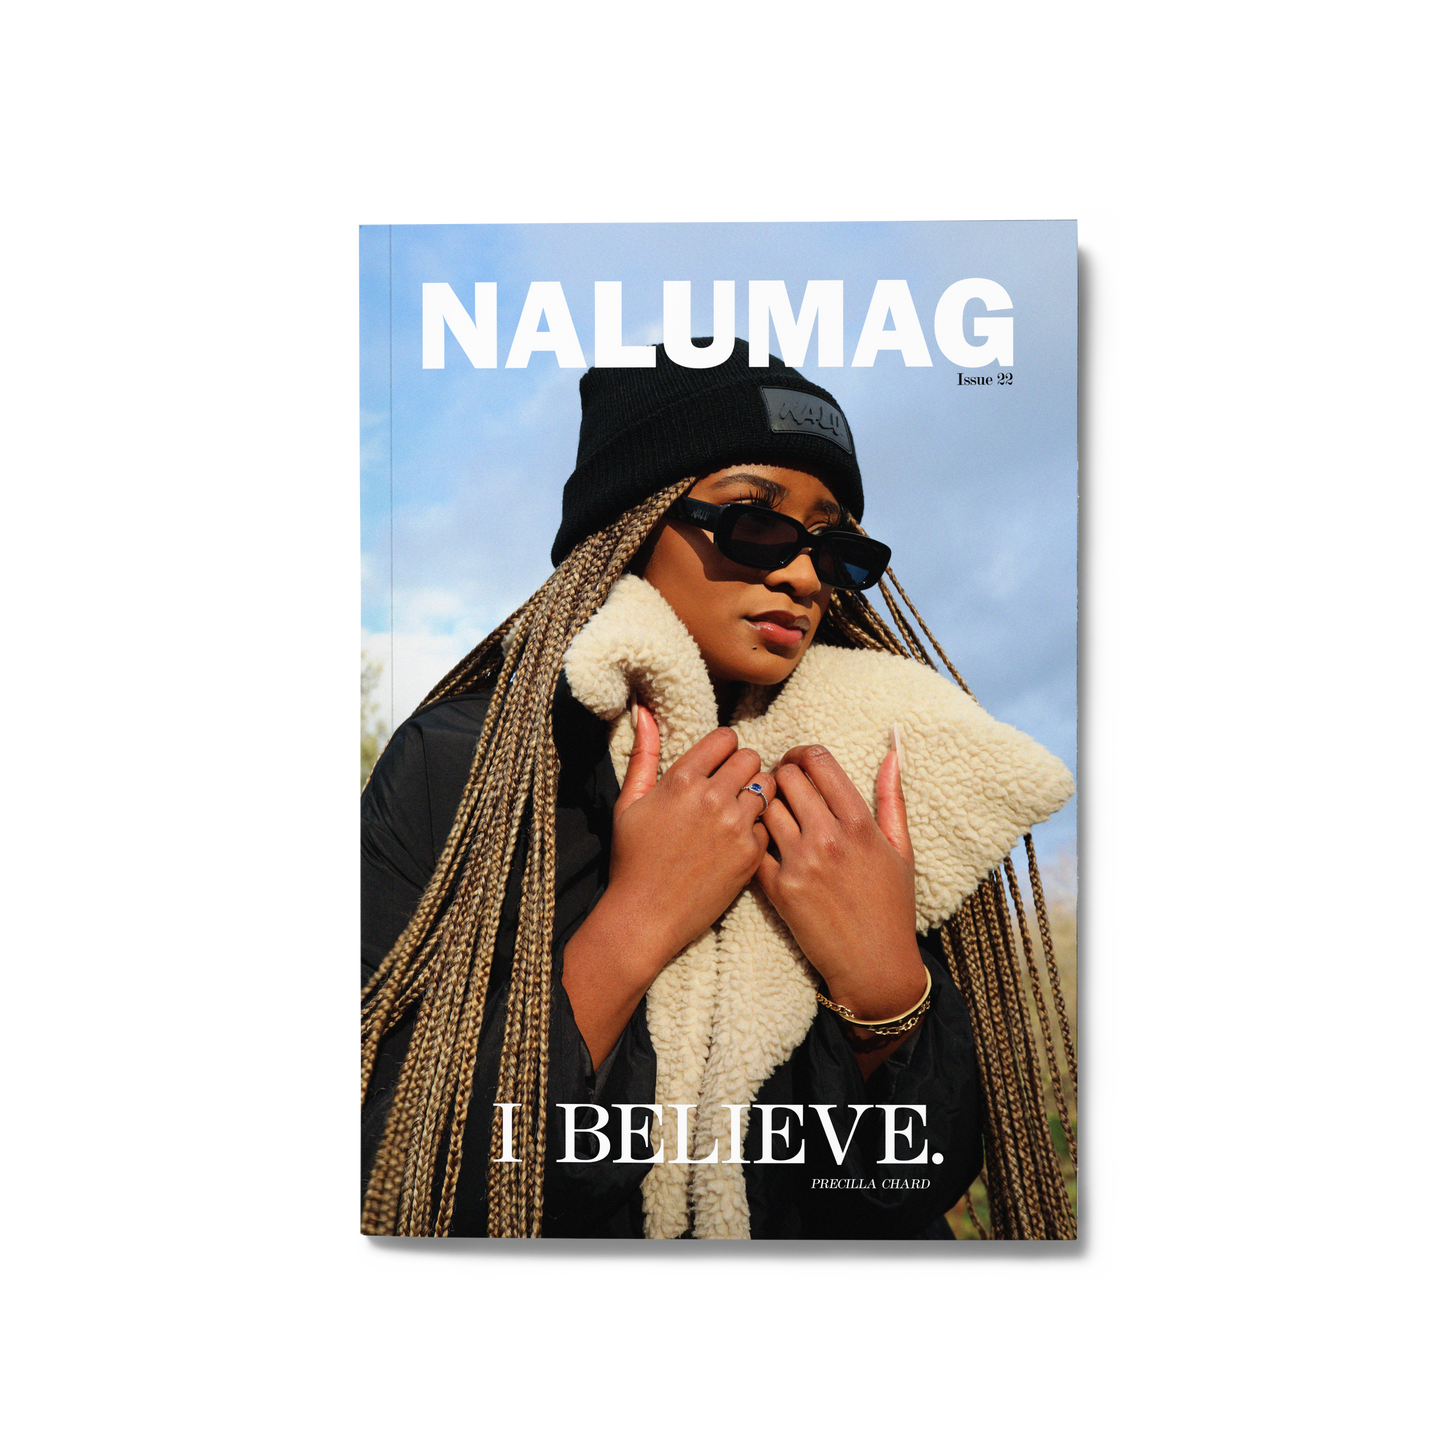 NALUMAG issue #22 “I BELIEVE”